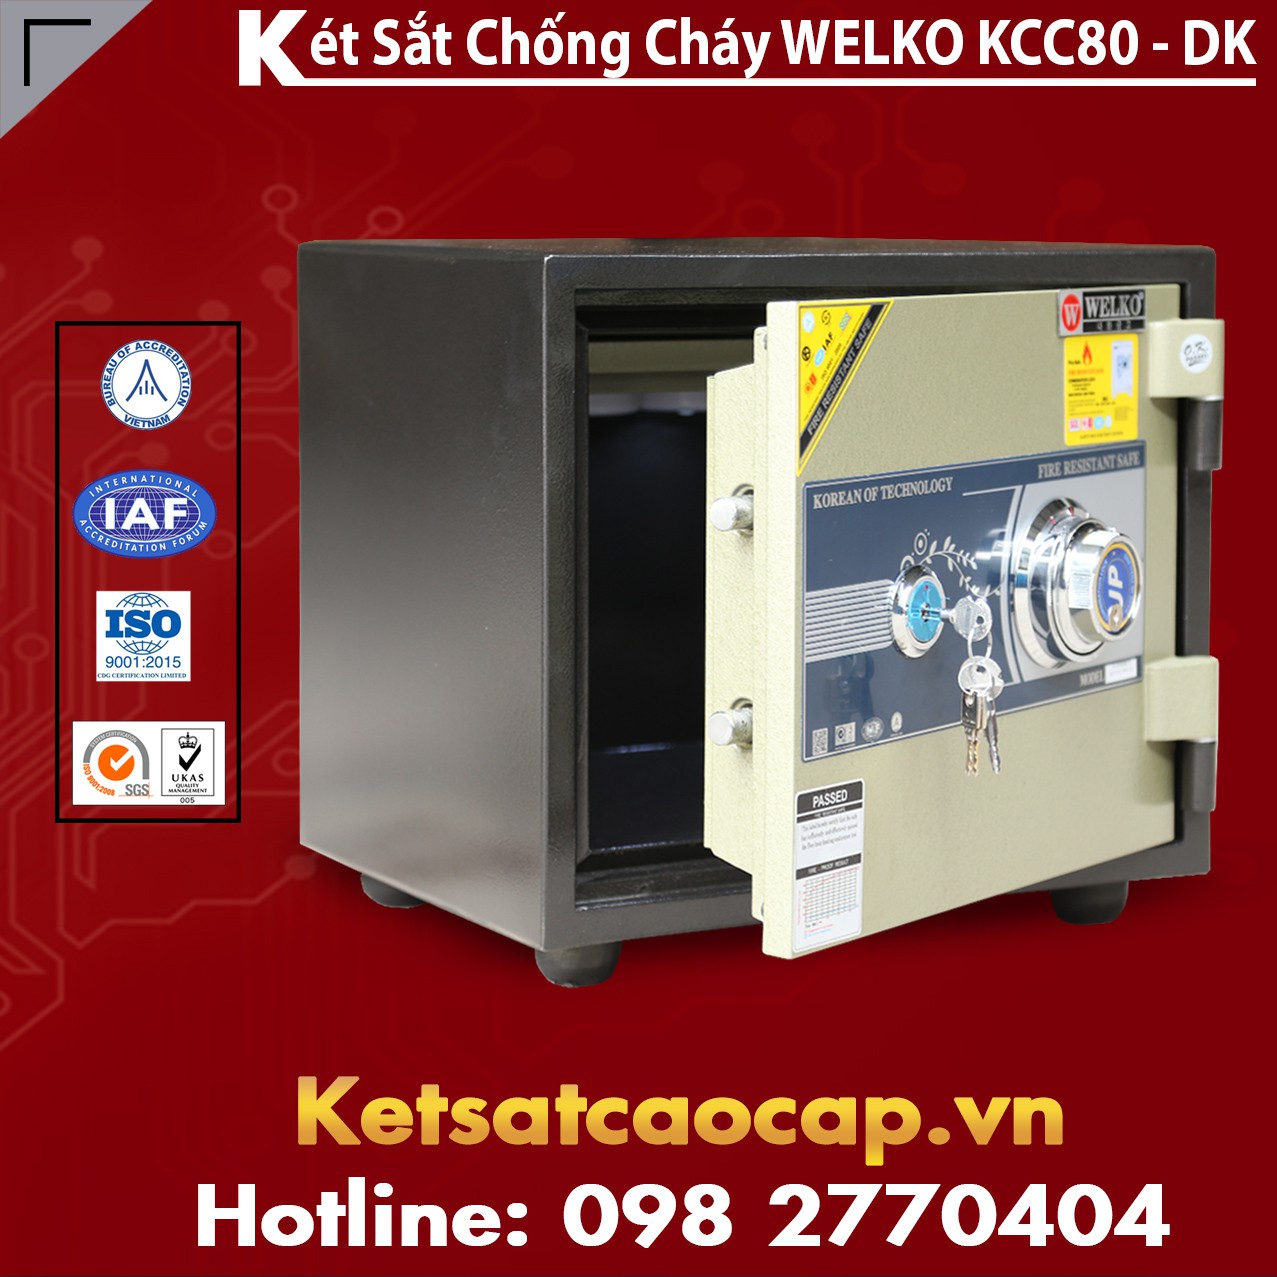 Hotel Safes Deposit Box Suppliers and Exporters Factory Direct & Fast Shipping Dai Ly Ban Ket Sat Chong Dap Cao Cap